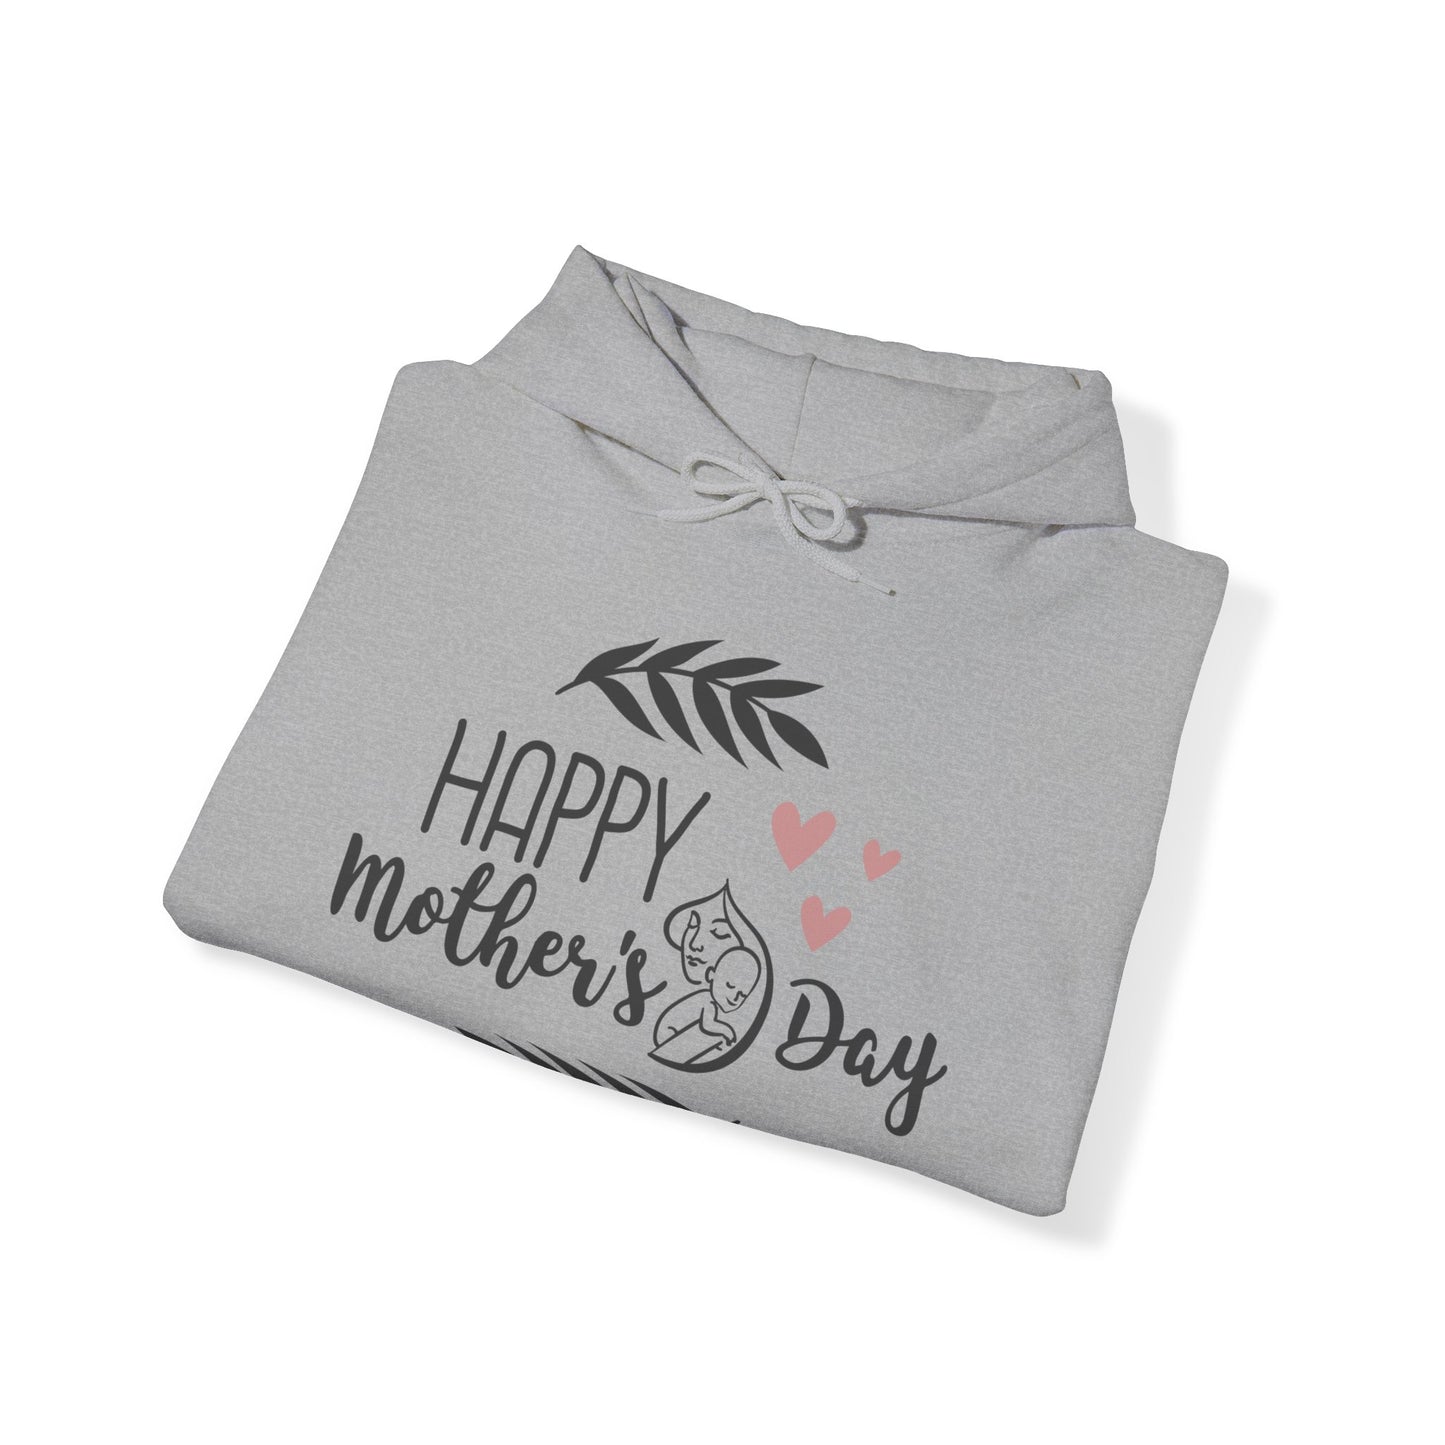 Happy Mother's Day - Unisex Heavy Blend™ Hooded Sweatshirt